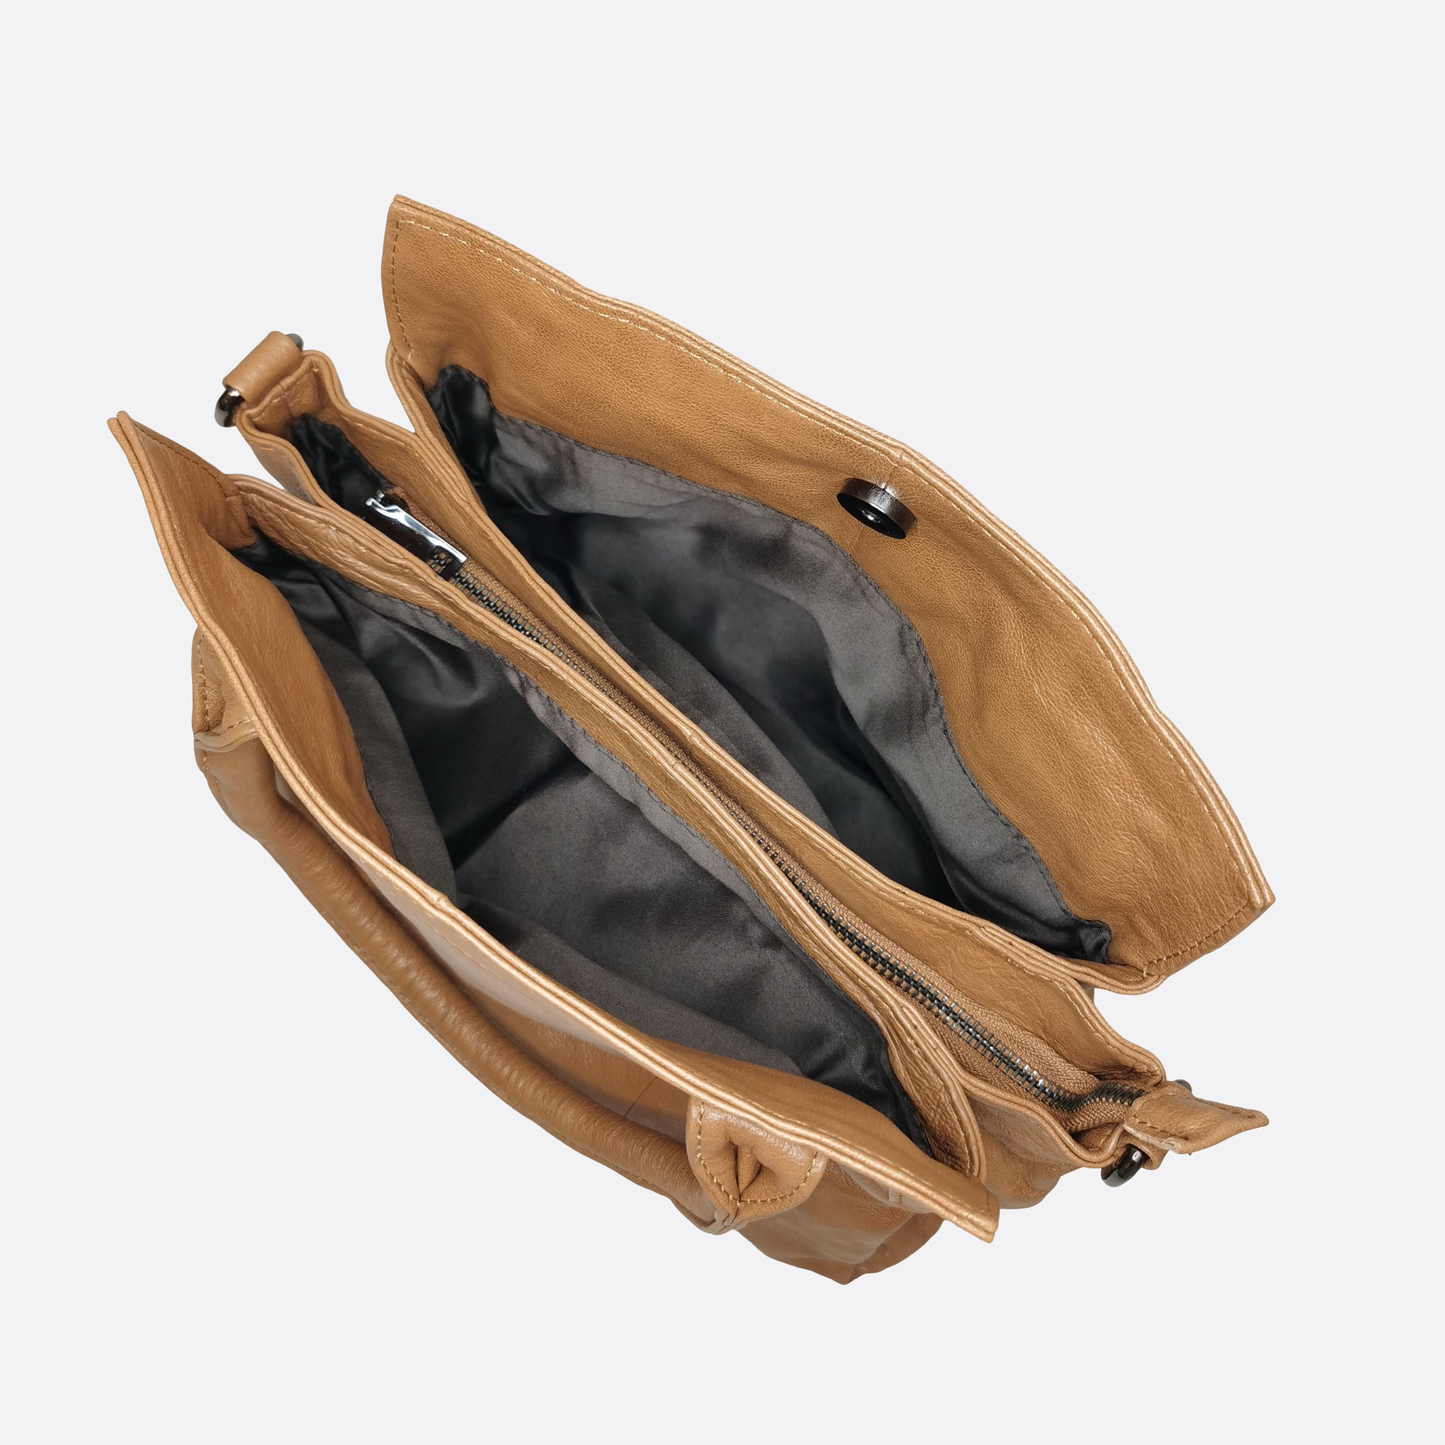 Women's genuine cowhide leather handbag Ingrid V2 design